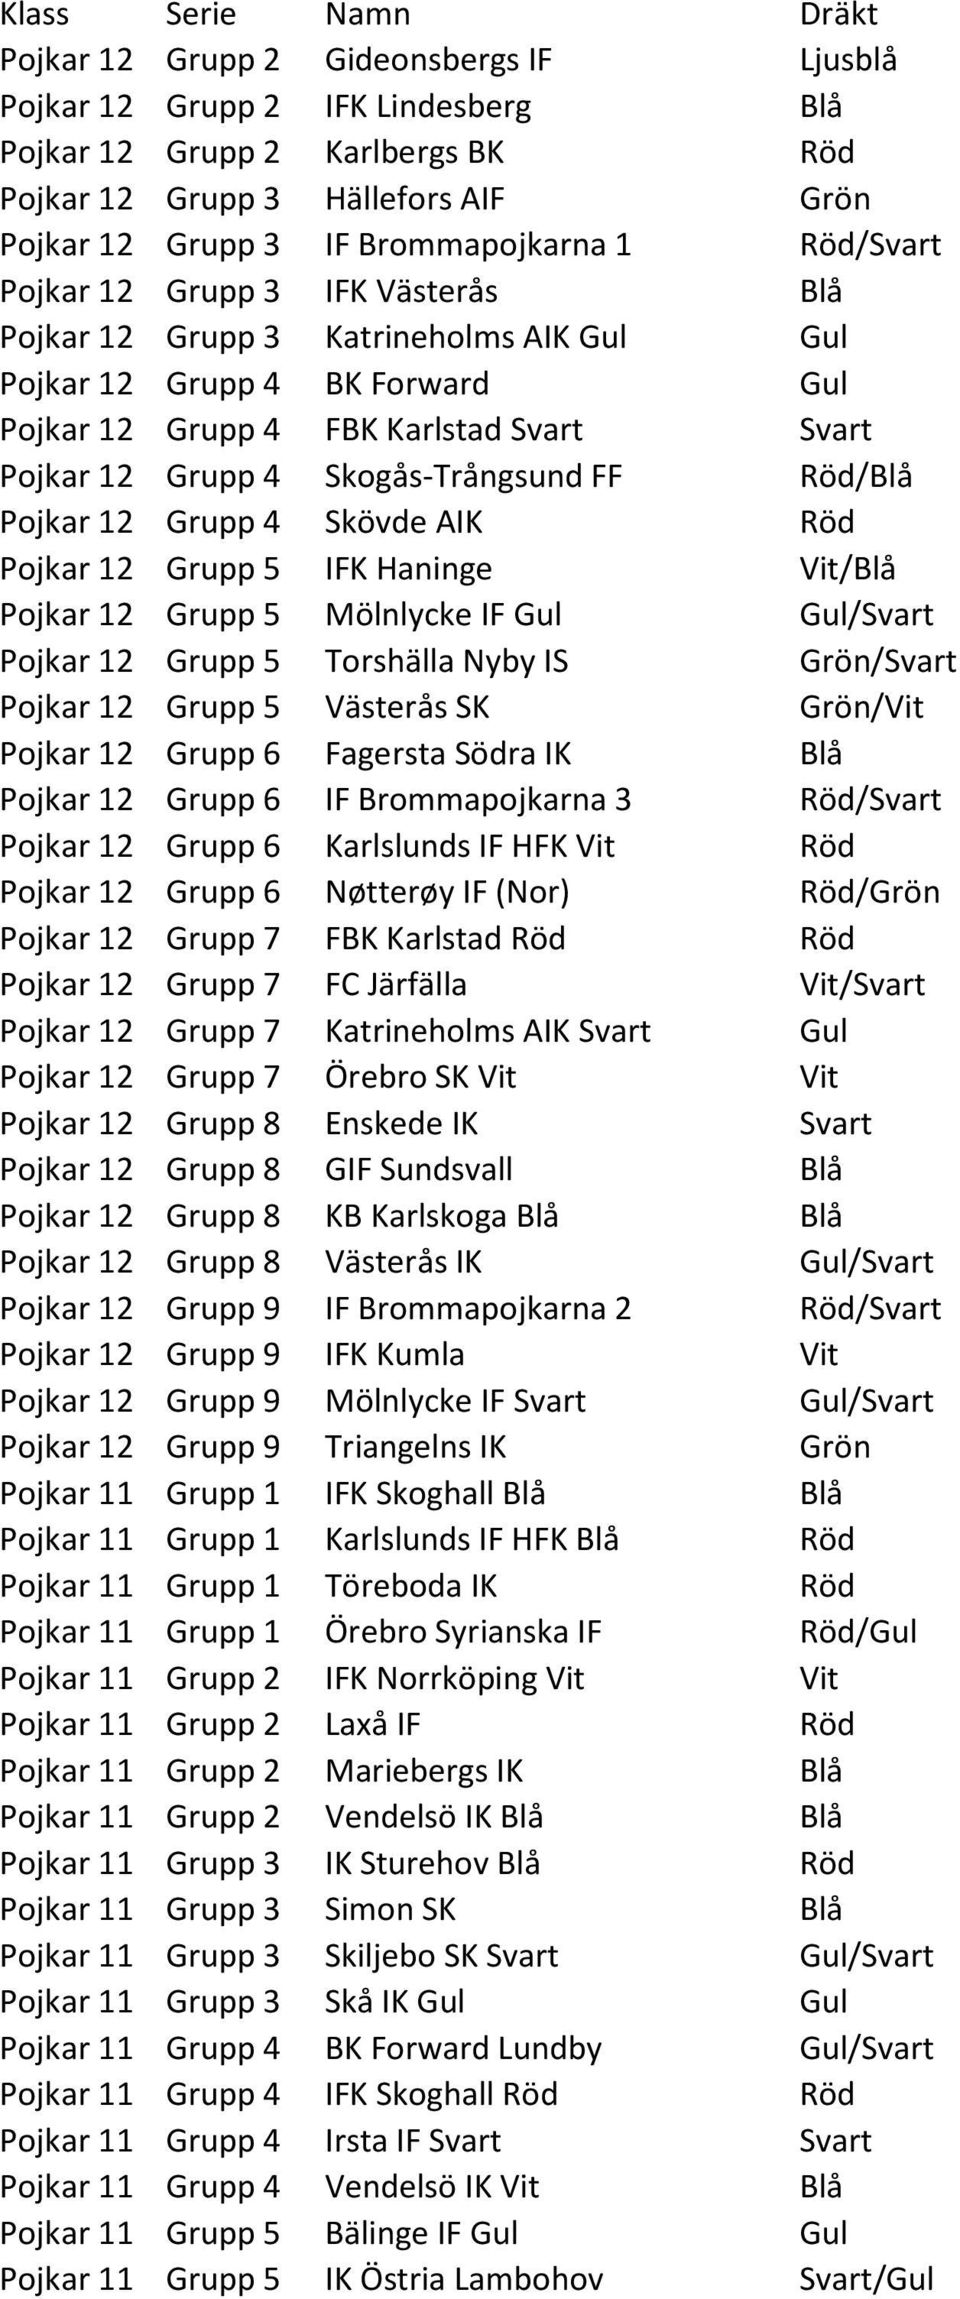 Pojkar 12 Grupp 4 Skövde AIK Röd Pojkar 12 Grupp 5 IFK Haninge Vit/Blå Pojkar 12 Grupp 5 Mölnlycke IF Gul Gul/Svart Pojkar 12 Grupp 5 Torshälla Nyby IS Grön/Svart Pojkar 12 Grupp 5 Västerås SK